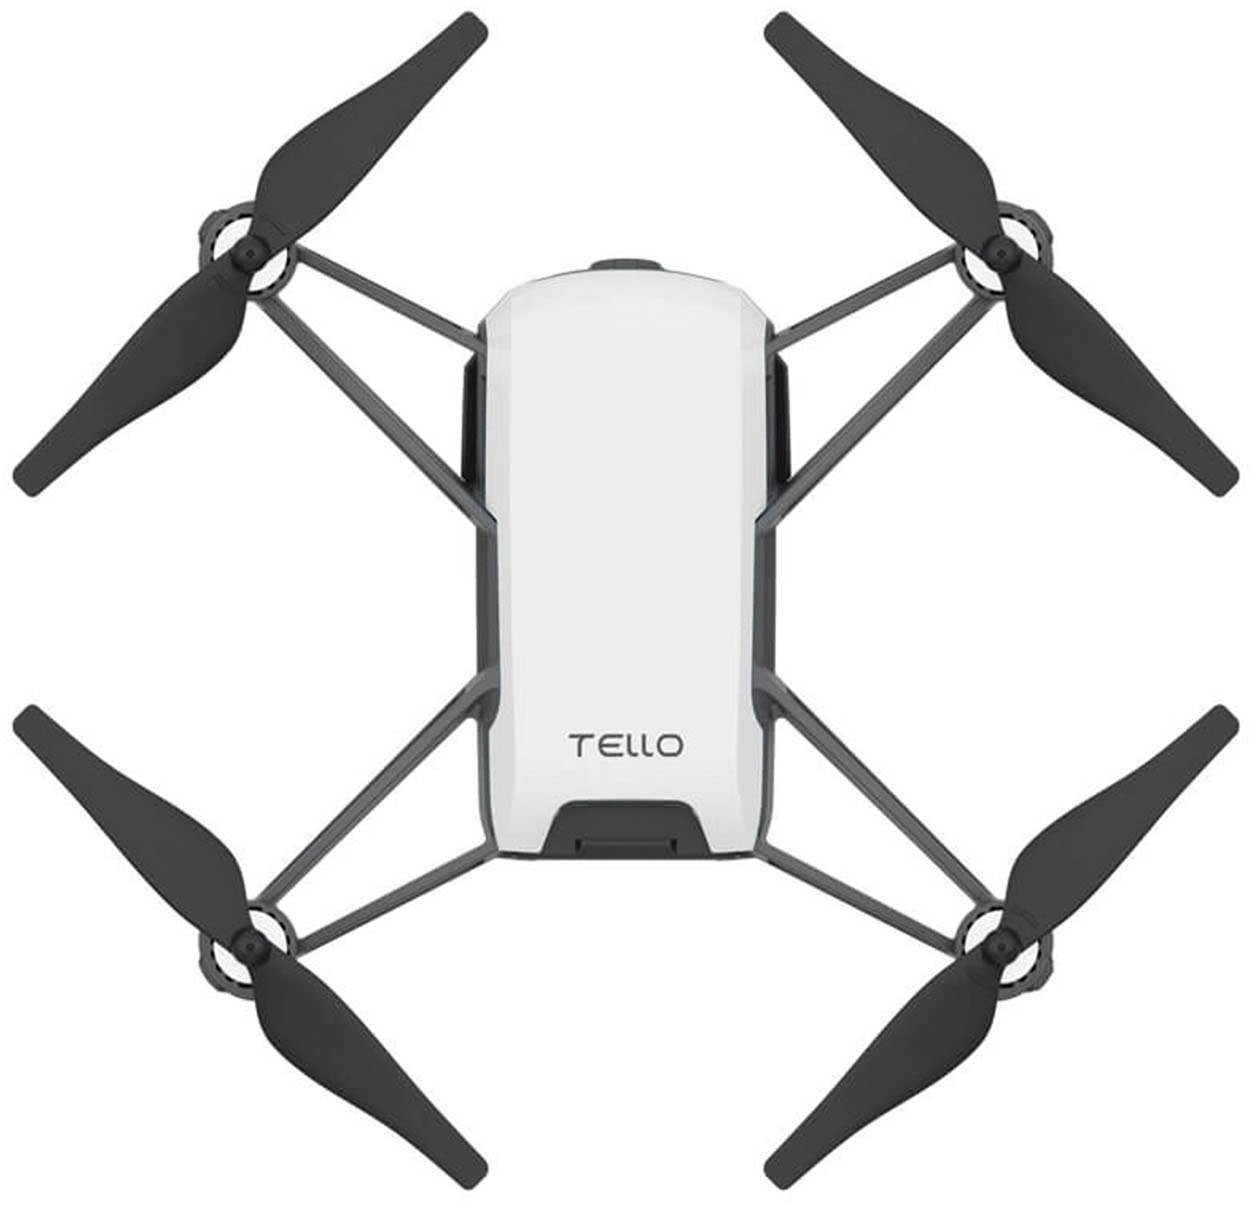 DJI) Ryze Tello Drohne (Powered Boost Combo by